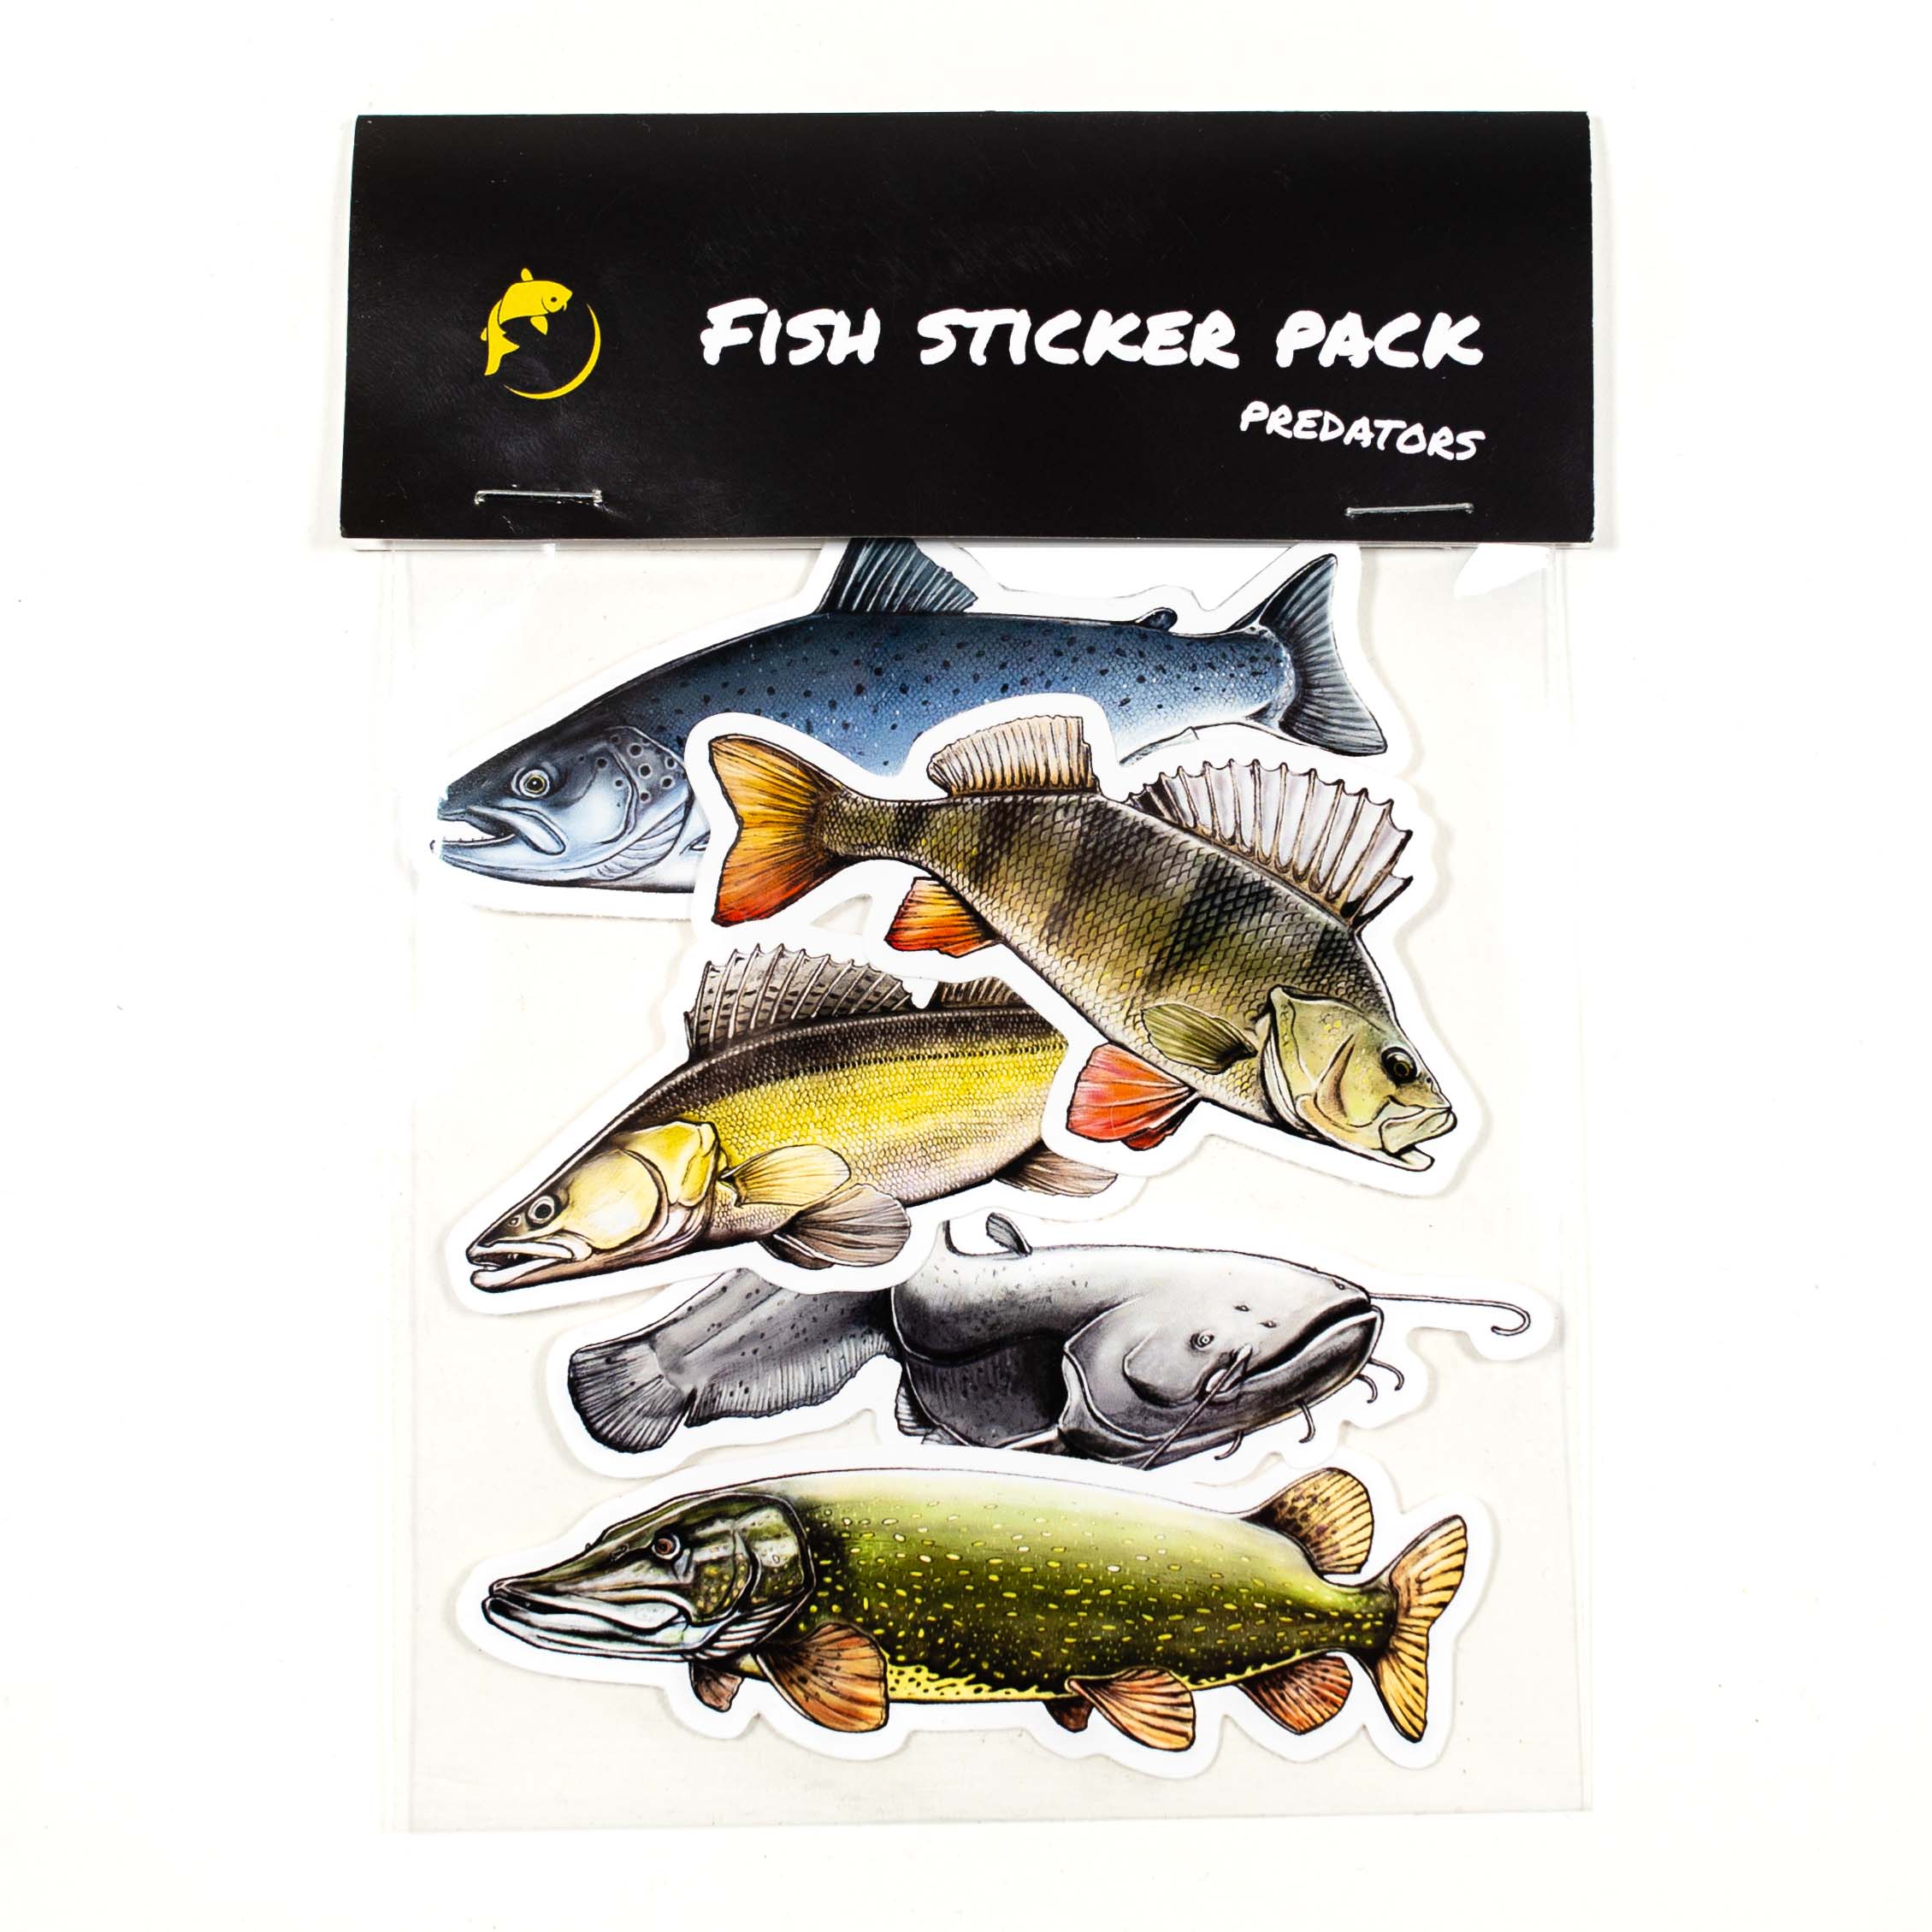 Fishing Sticker -  UK